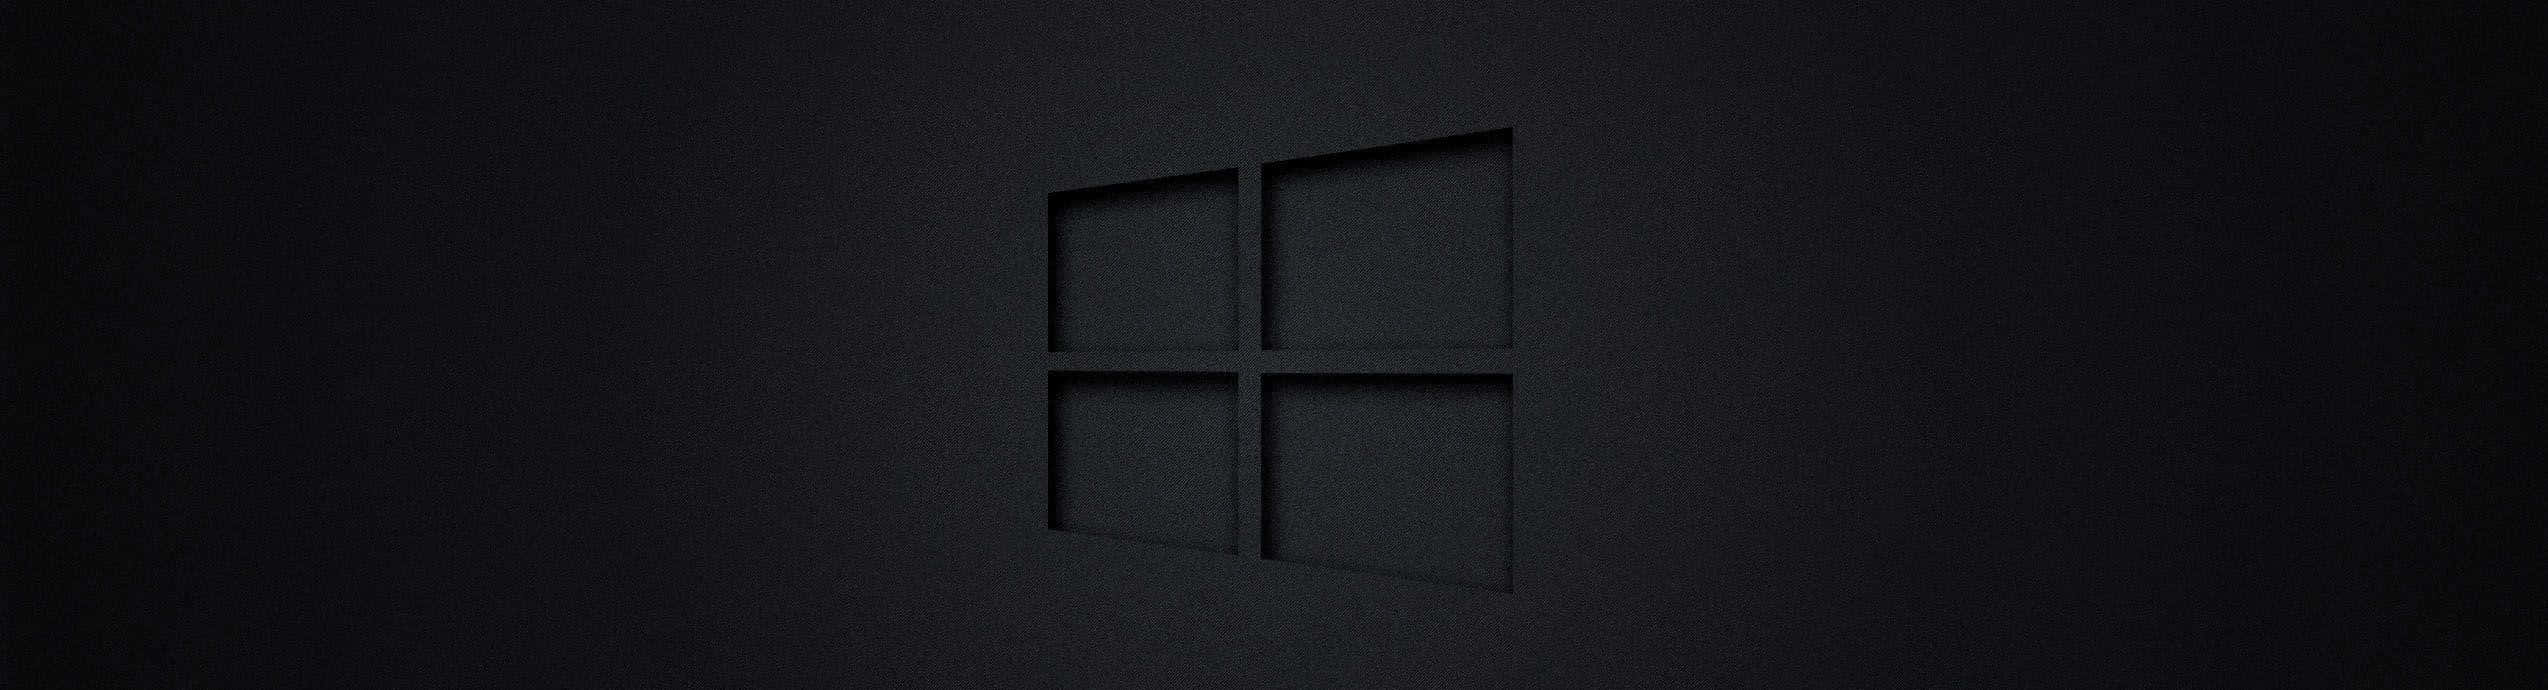 Dual Windows